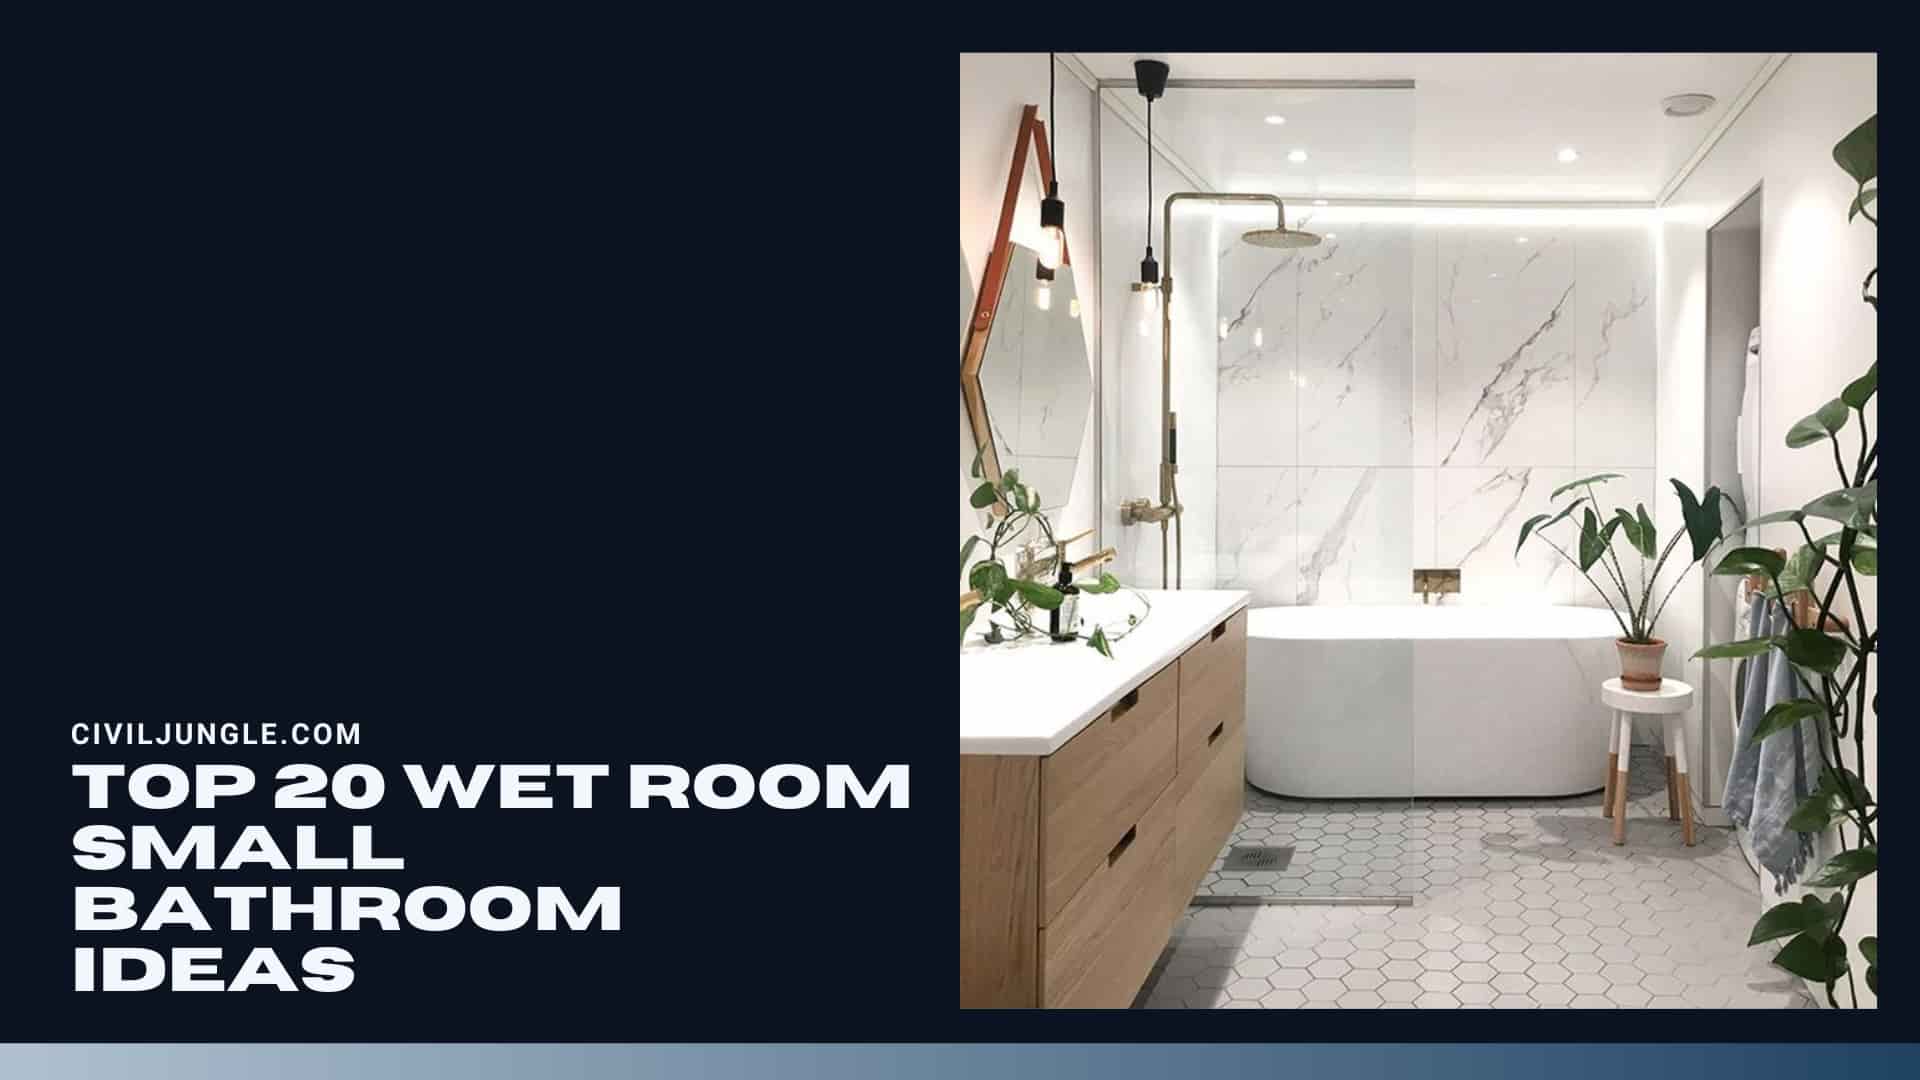 Top 20 Wet Room Small Bathroom Ideas